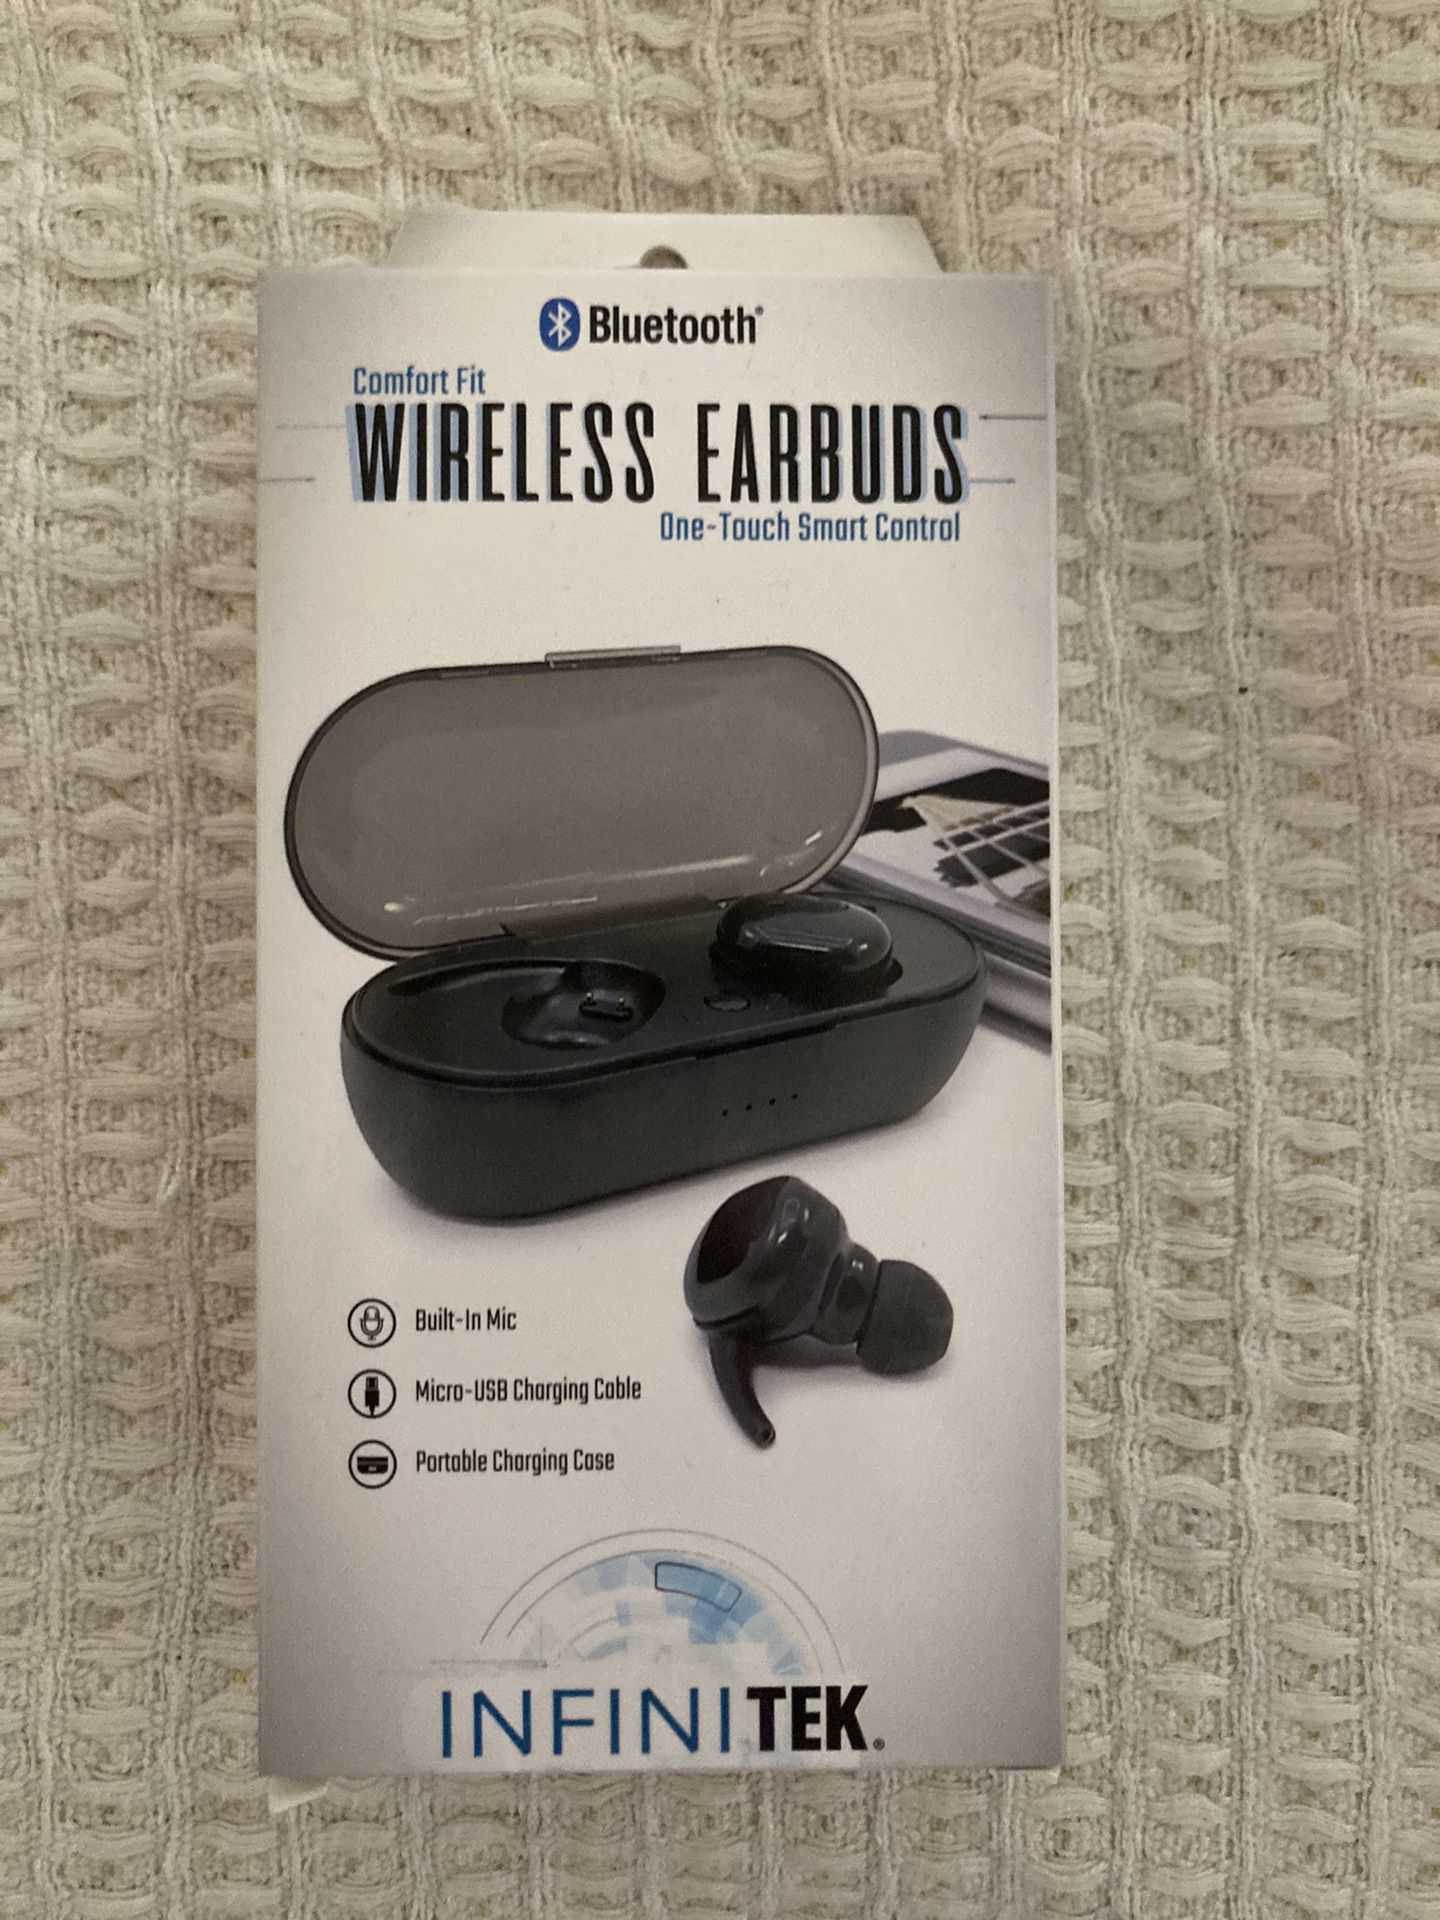 Infinitek bluetooth wireless earbuds